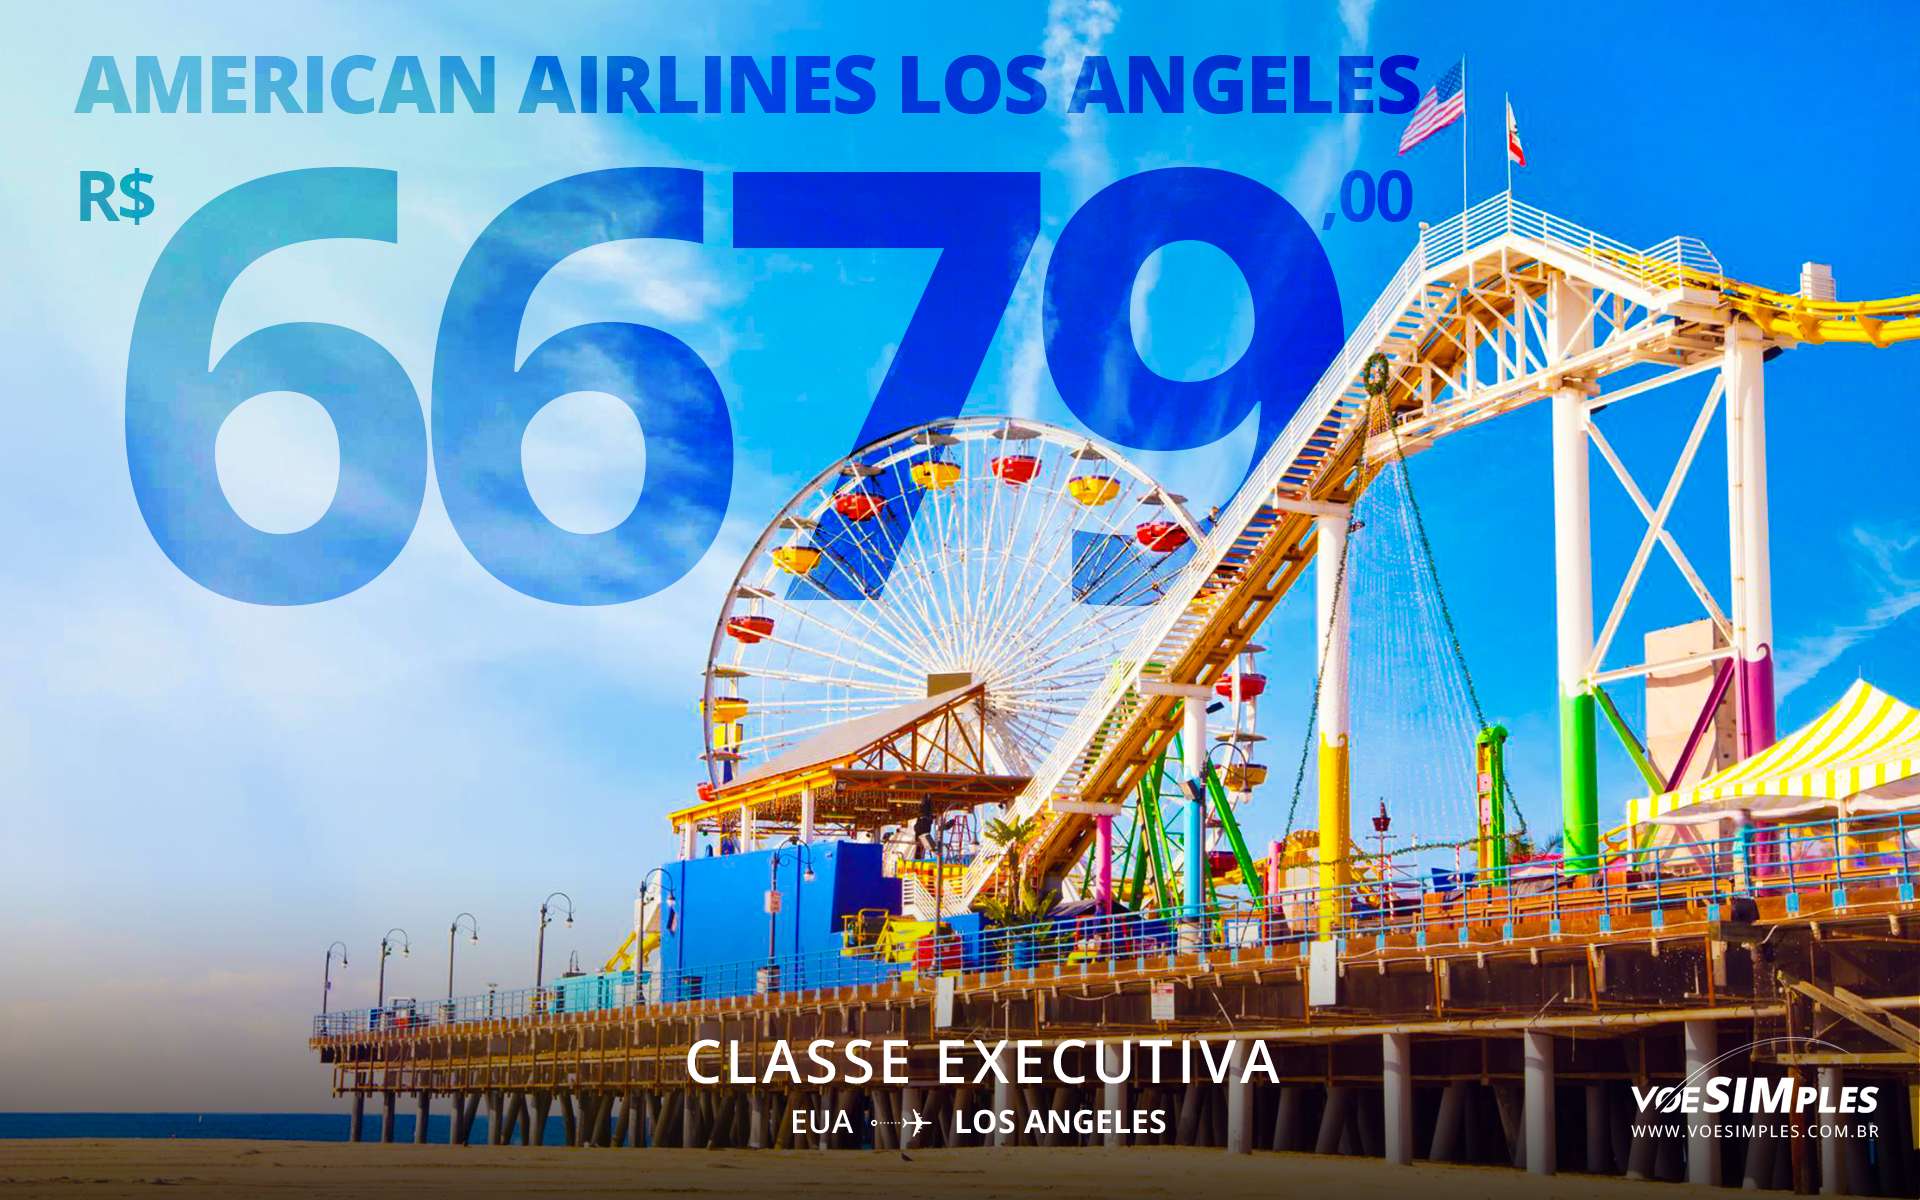 Passagem aérea executiva American Airlines Los Angeles Voe Simples